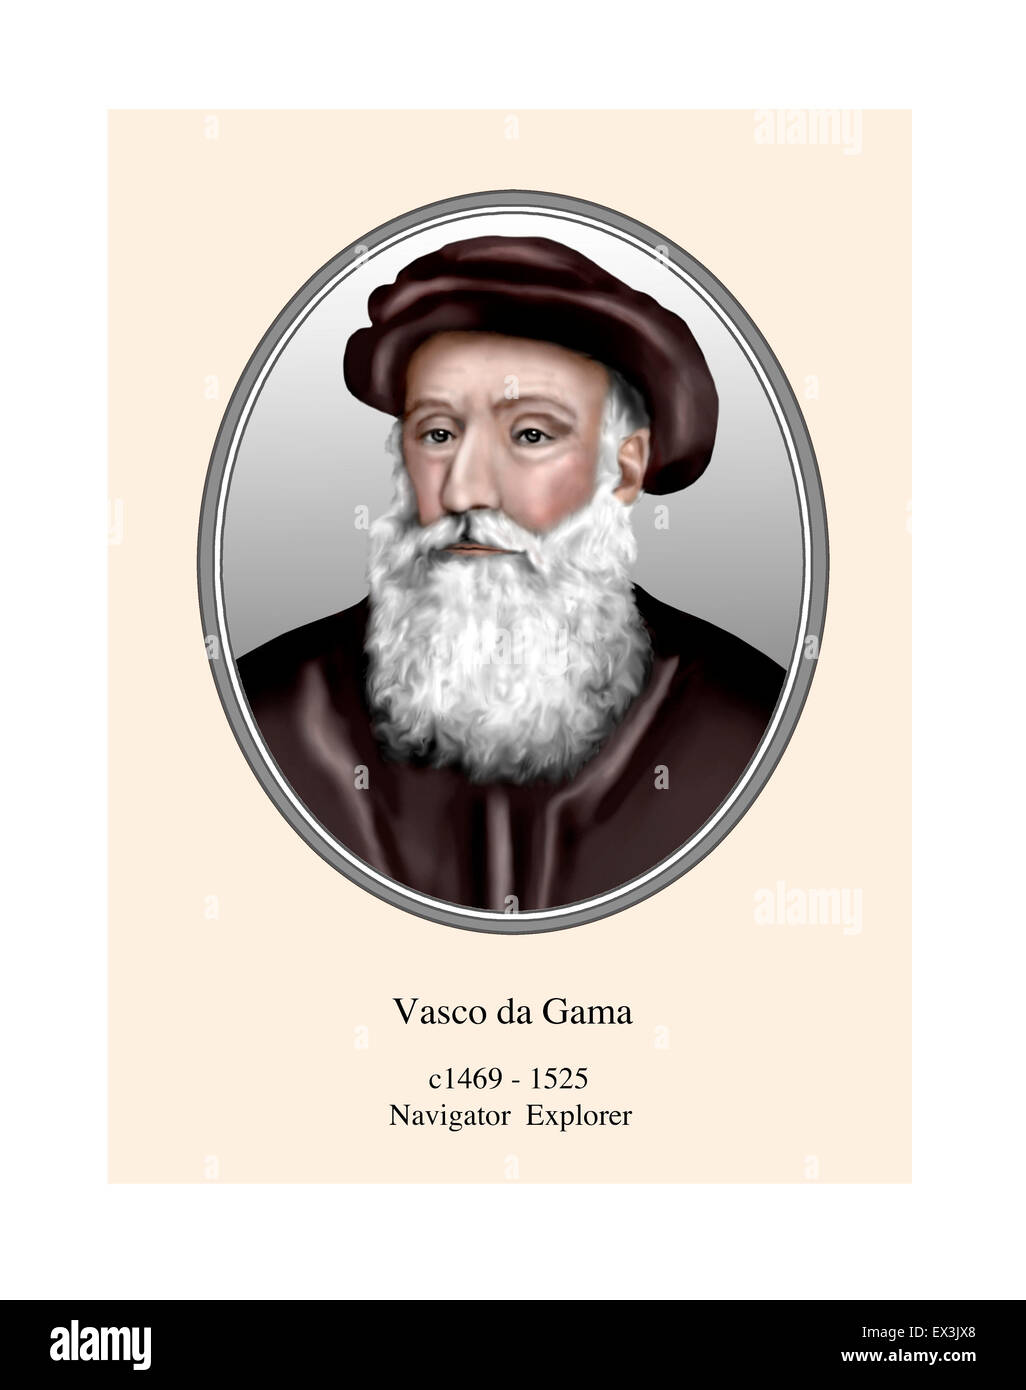 Vasco da Gama Portrait Modern Illustration Stock Photo